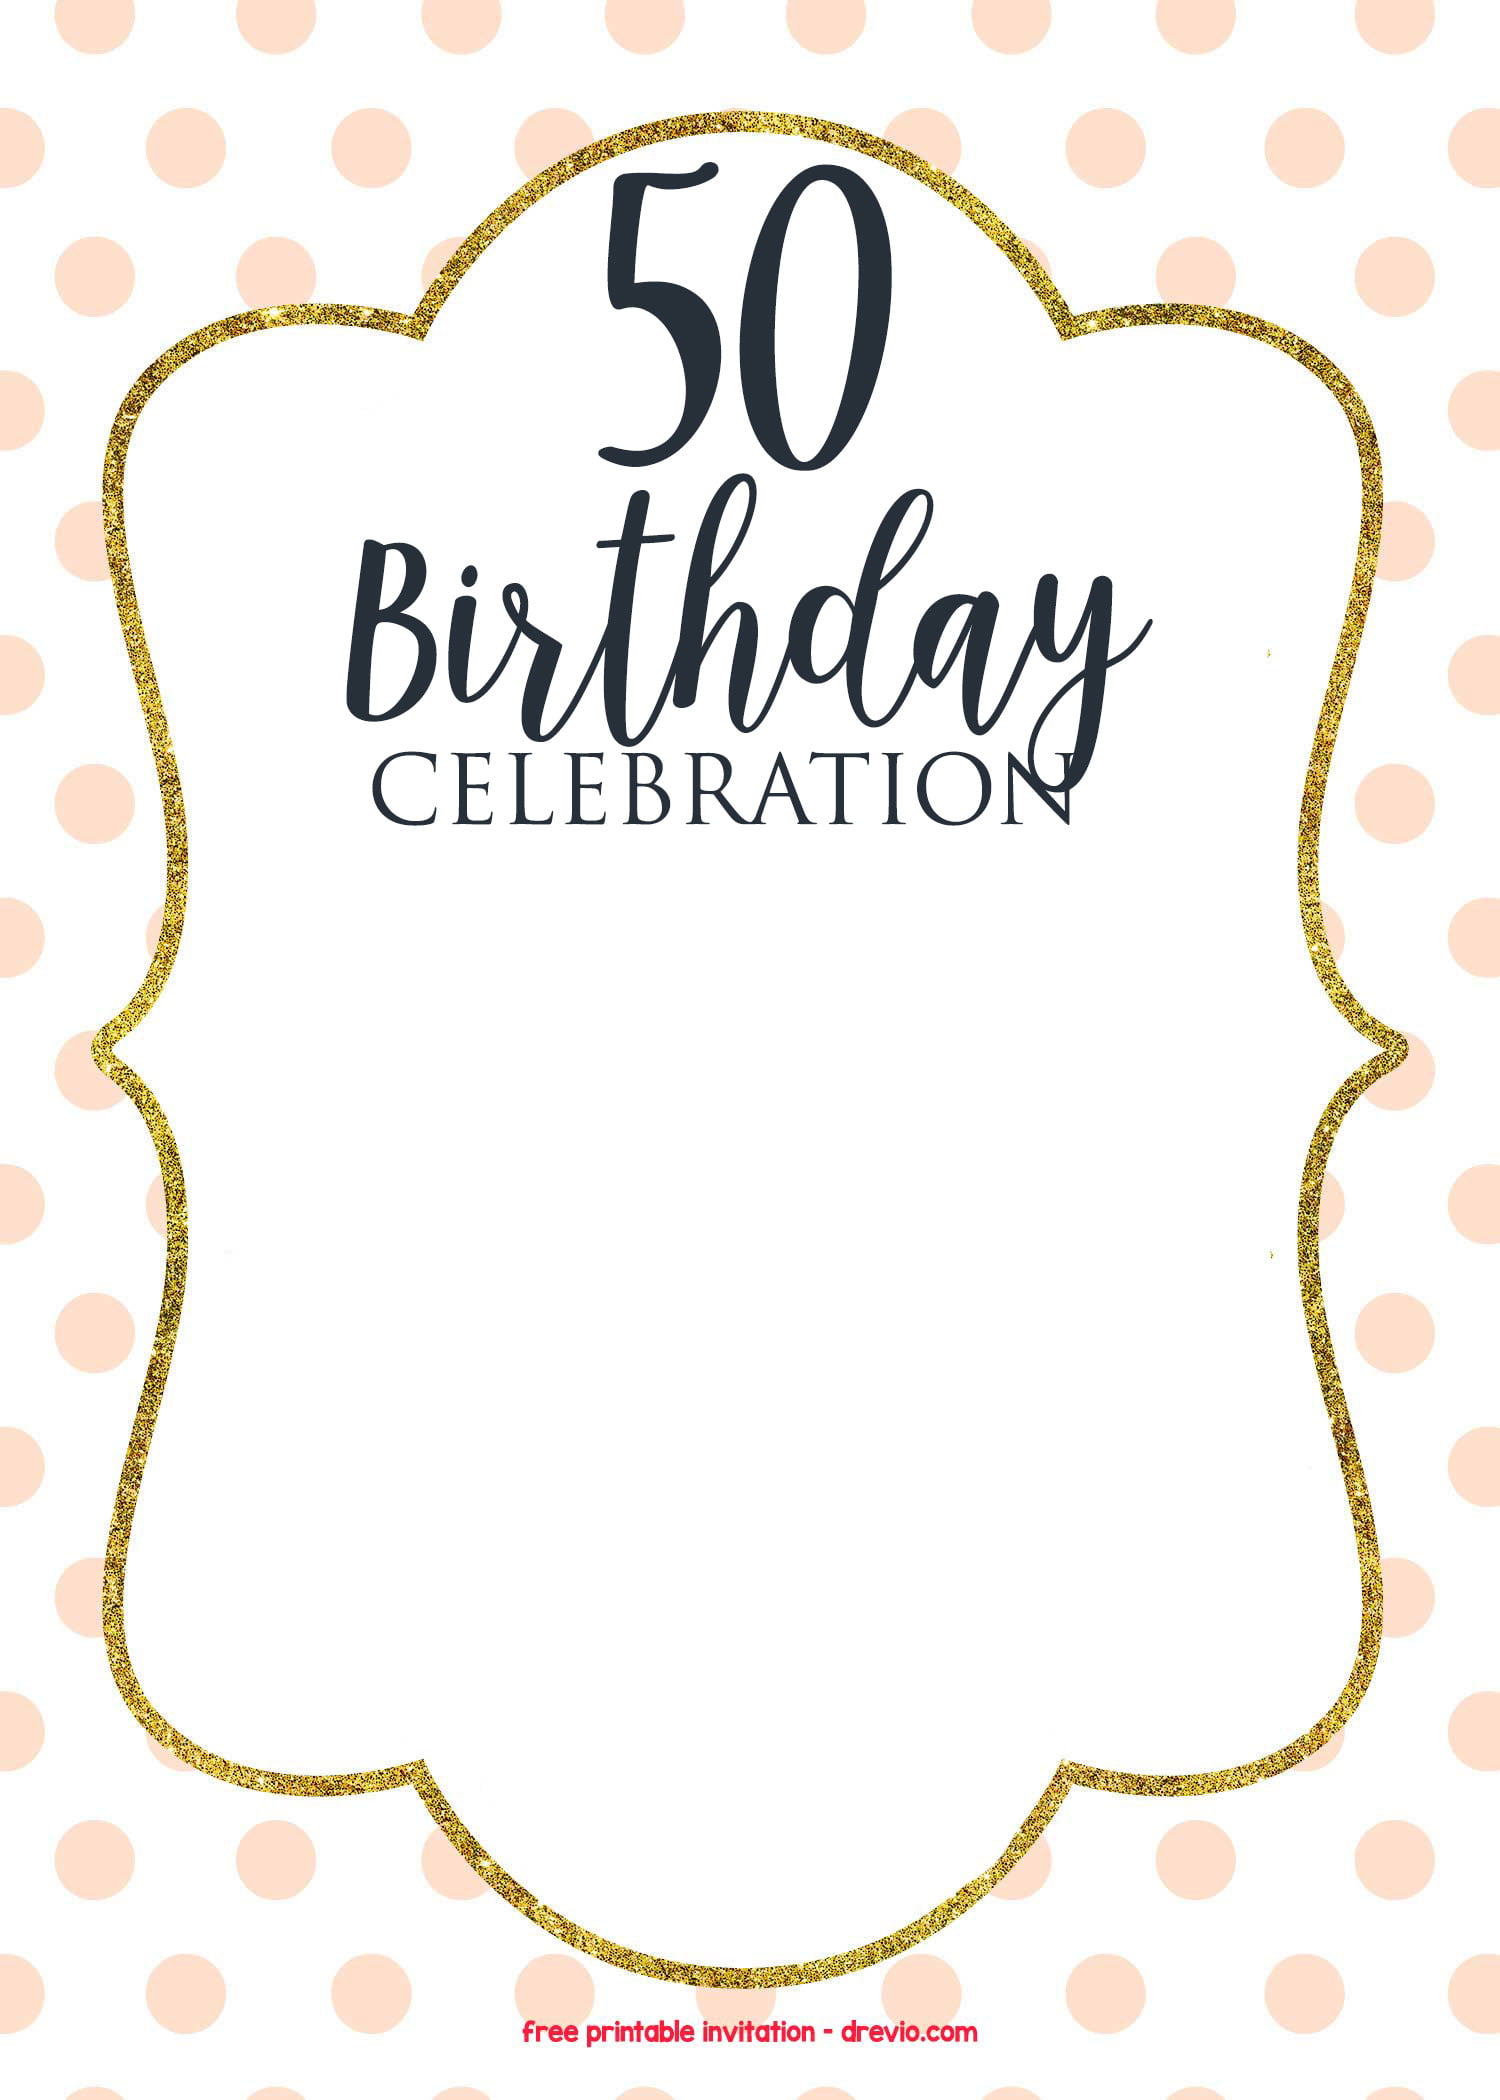 50th-birthday-invitations-online-free-printable-birthday-invitation